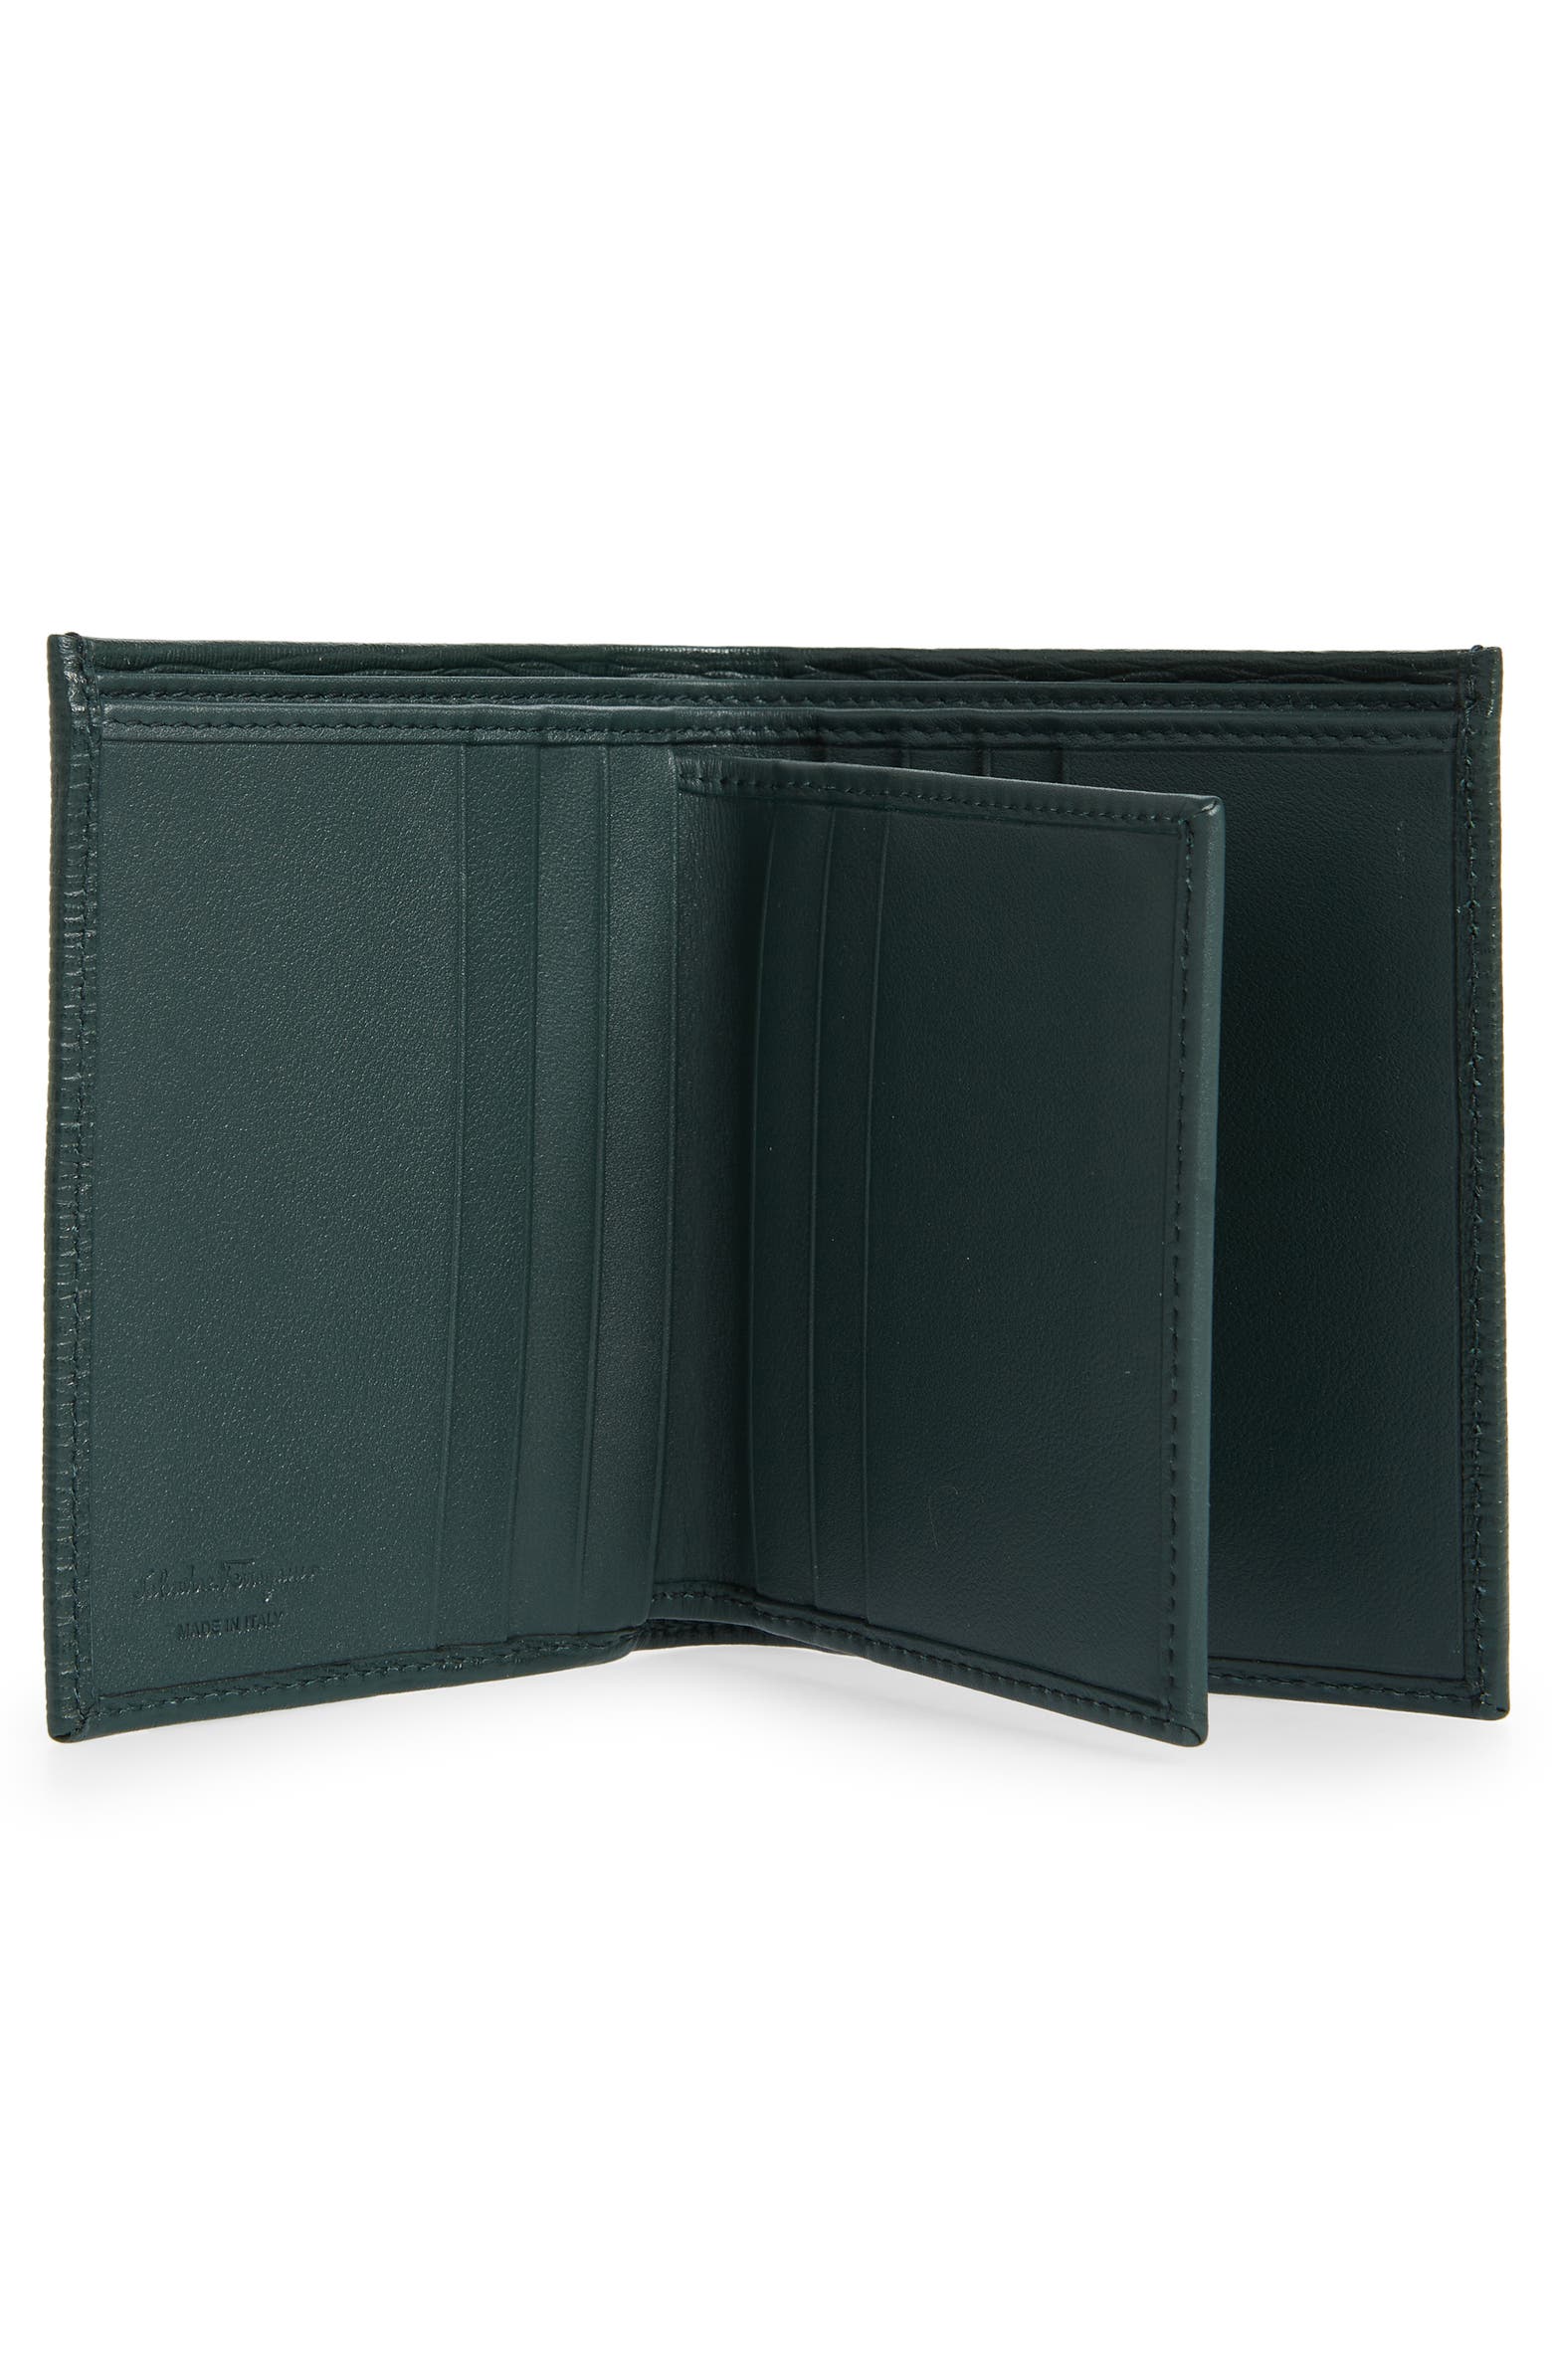 FERRAGAMO Revival Double Gancio Leather Bifold Card Case | Nordstrom